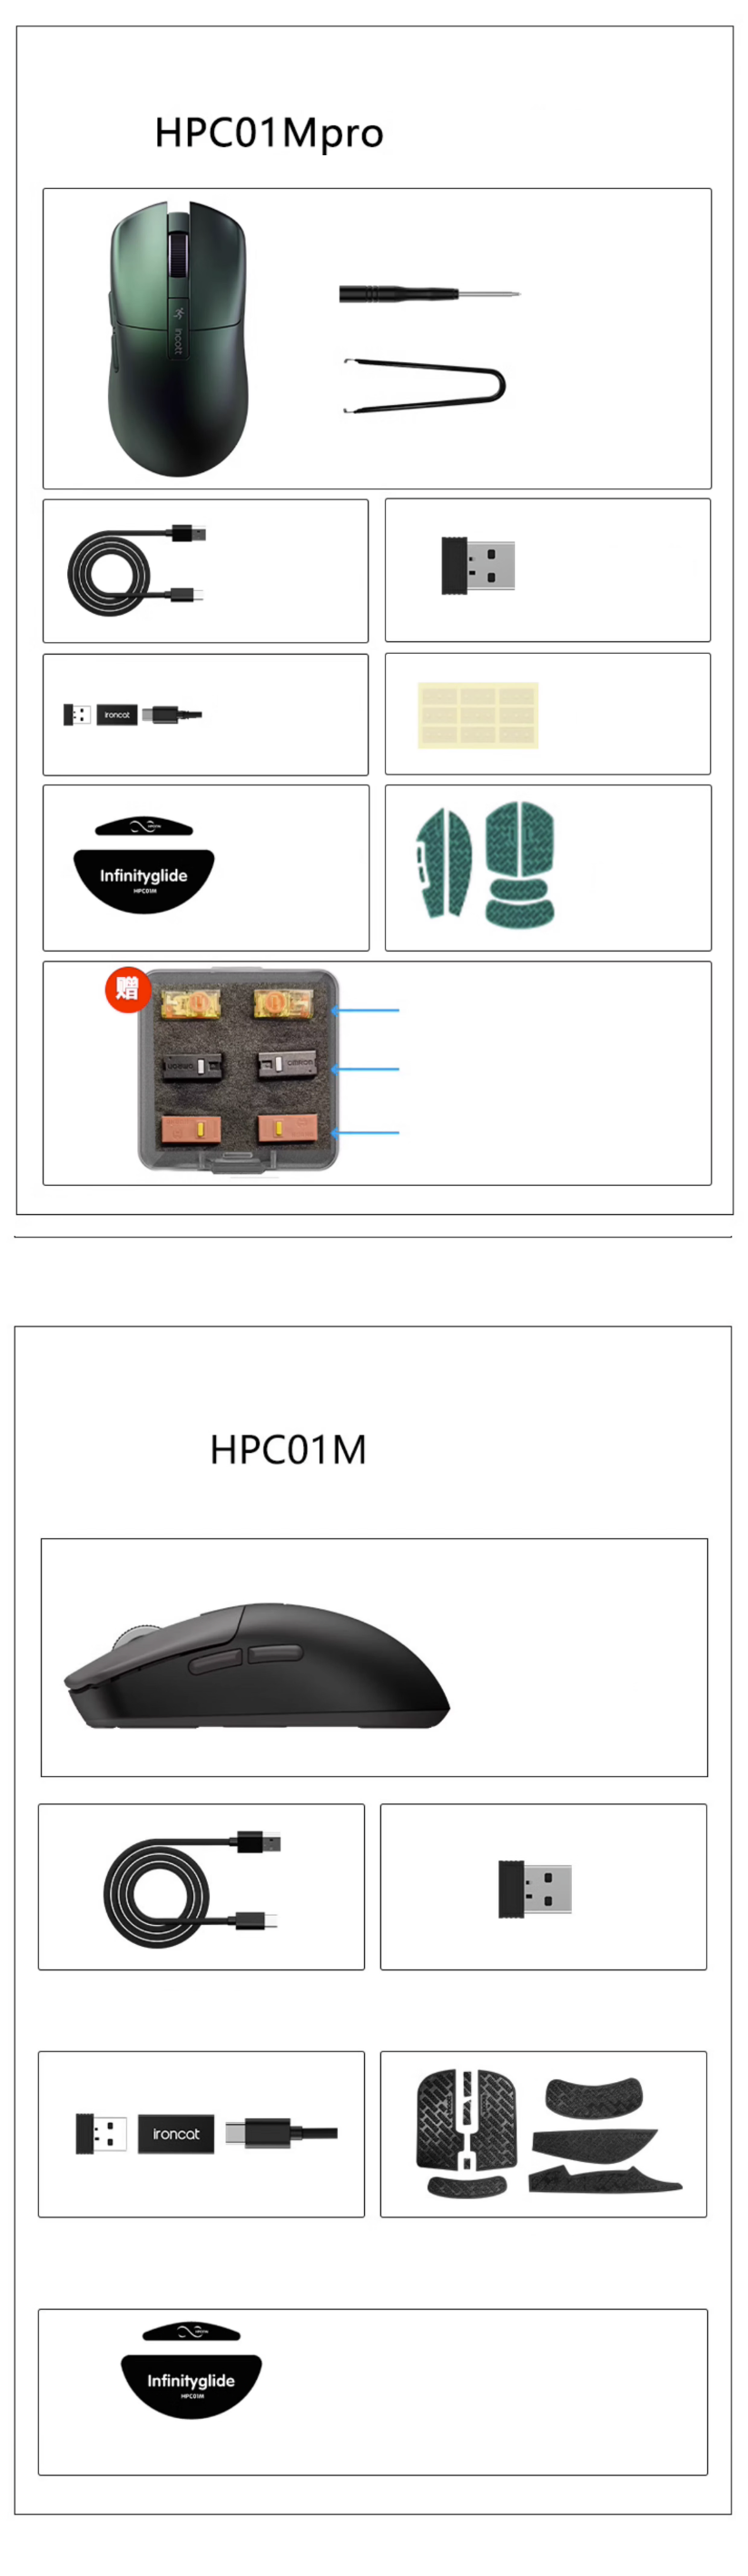 Ironcat(incott) HPC01M/HPC01M Pro Hot Swap Mouse-Ipopular Shop